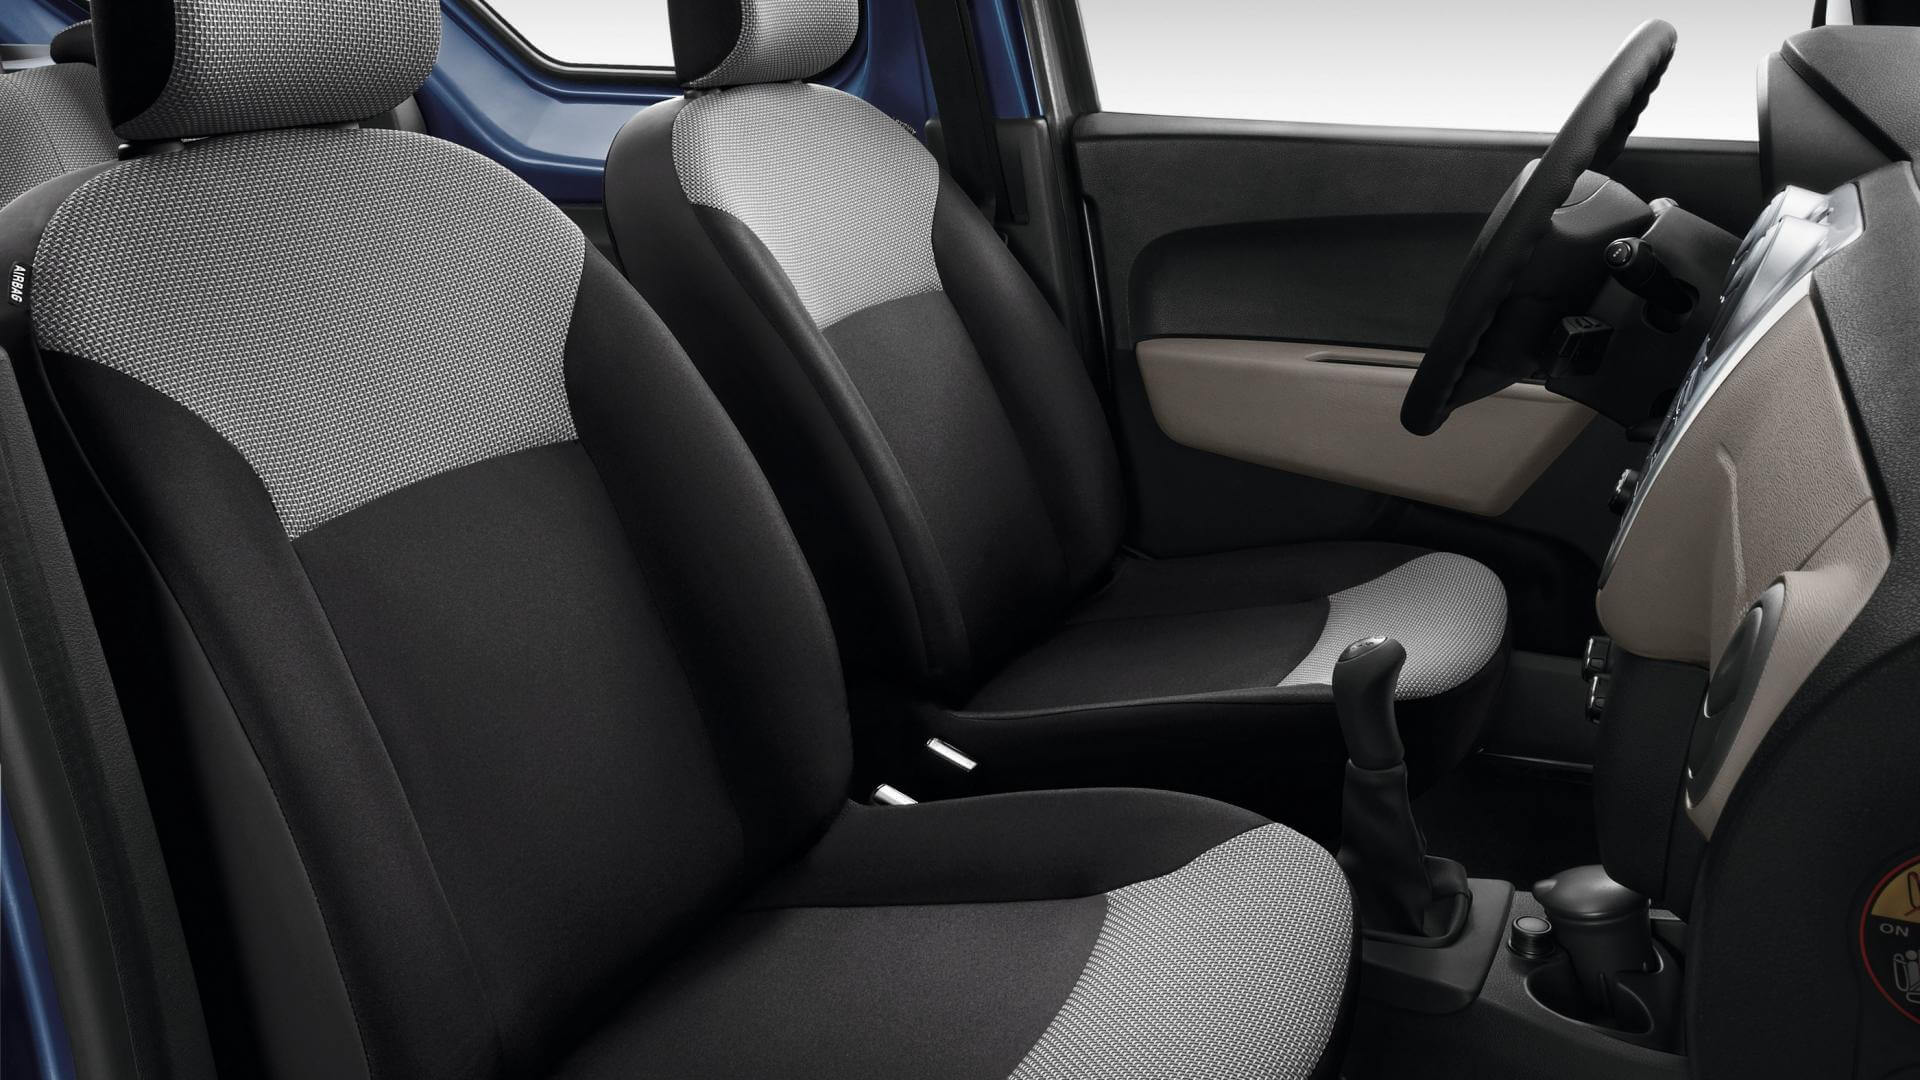 Renault Dokker interior - Seats